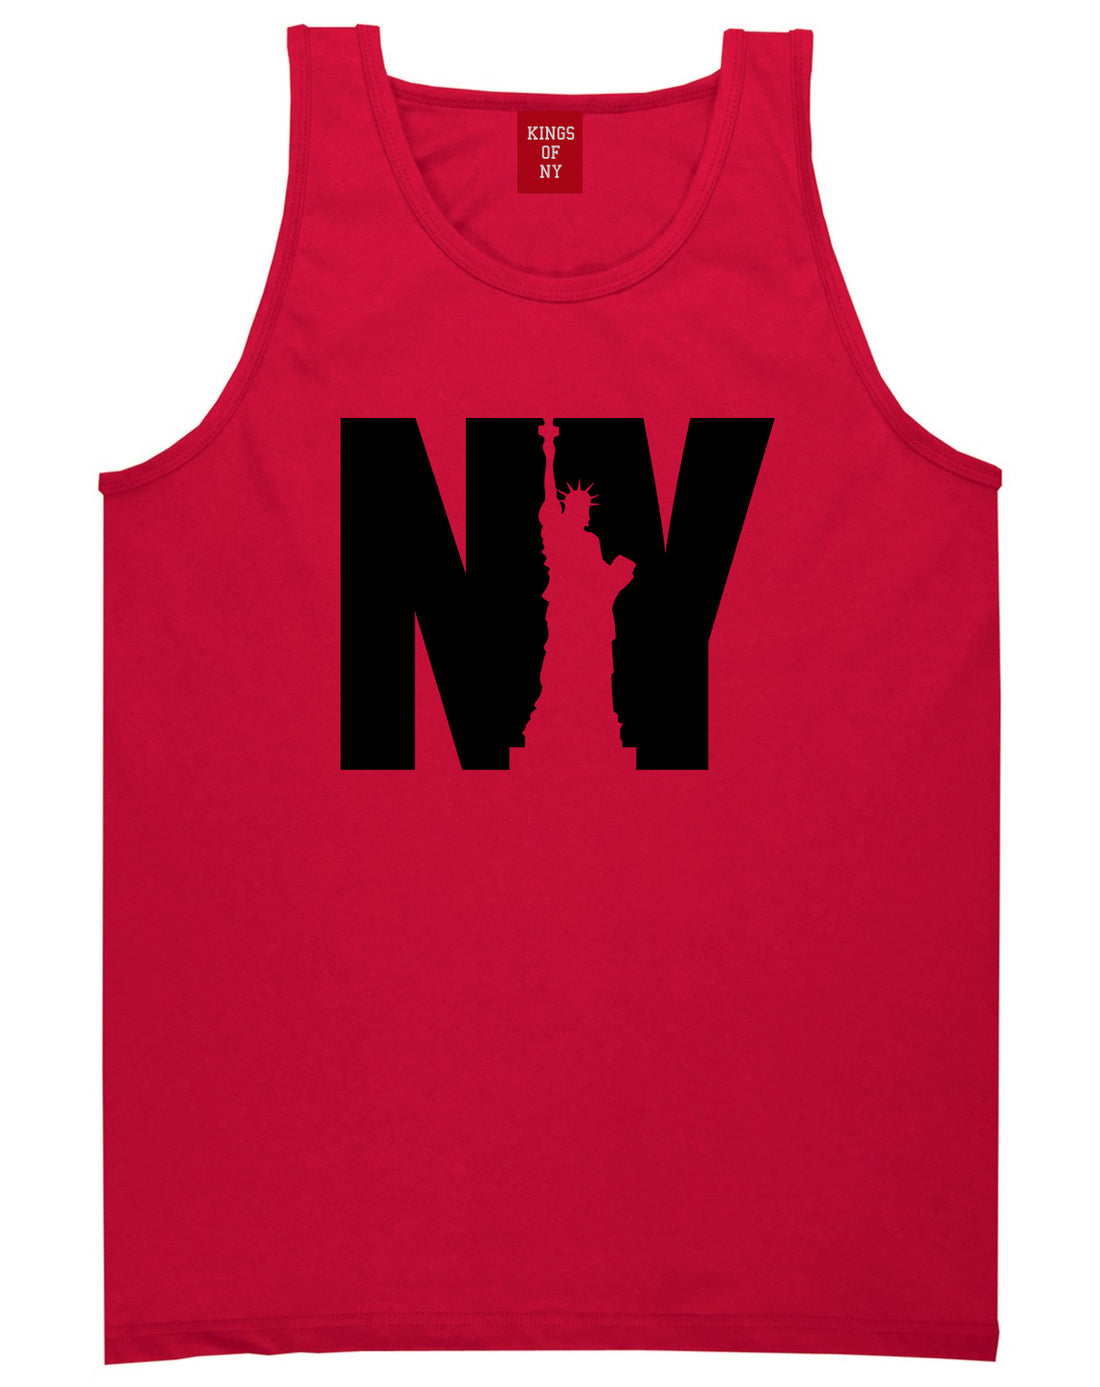 NY Statue Of Liberty Mens Tank Top Shirt Red